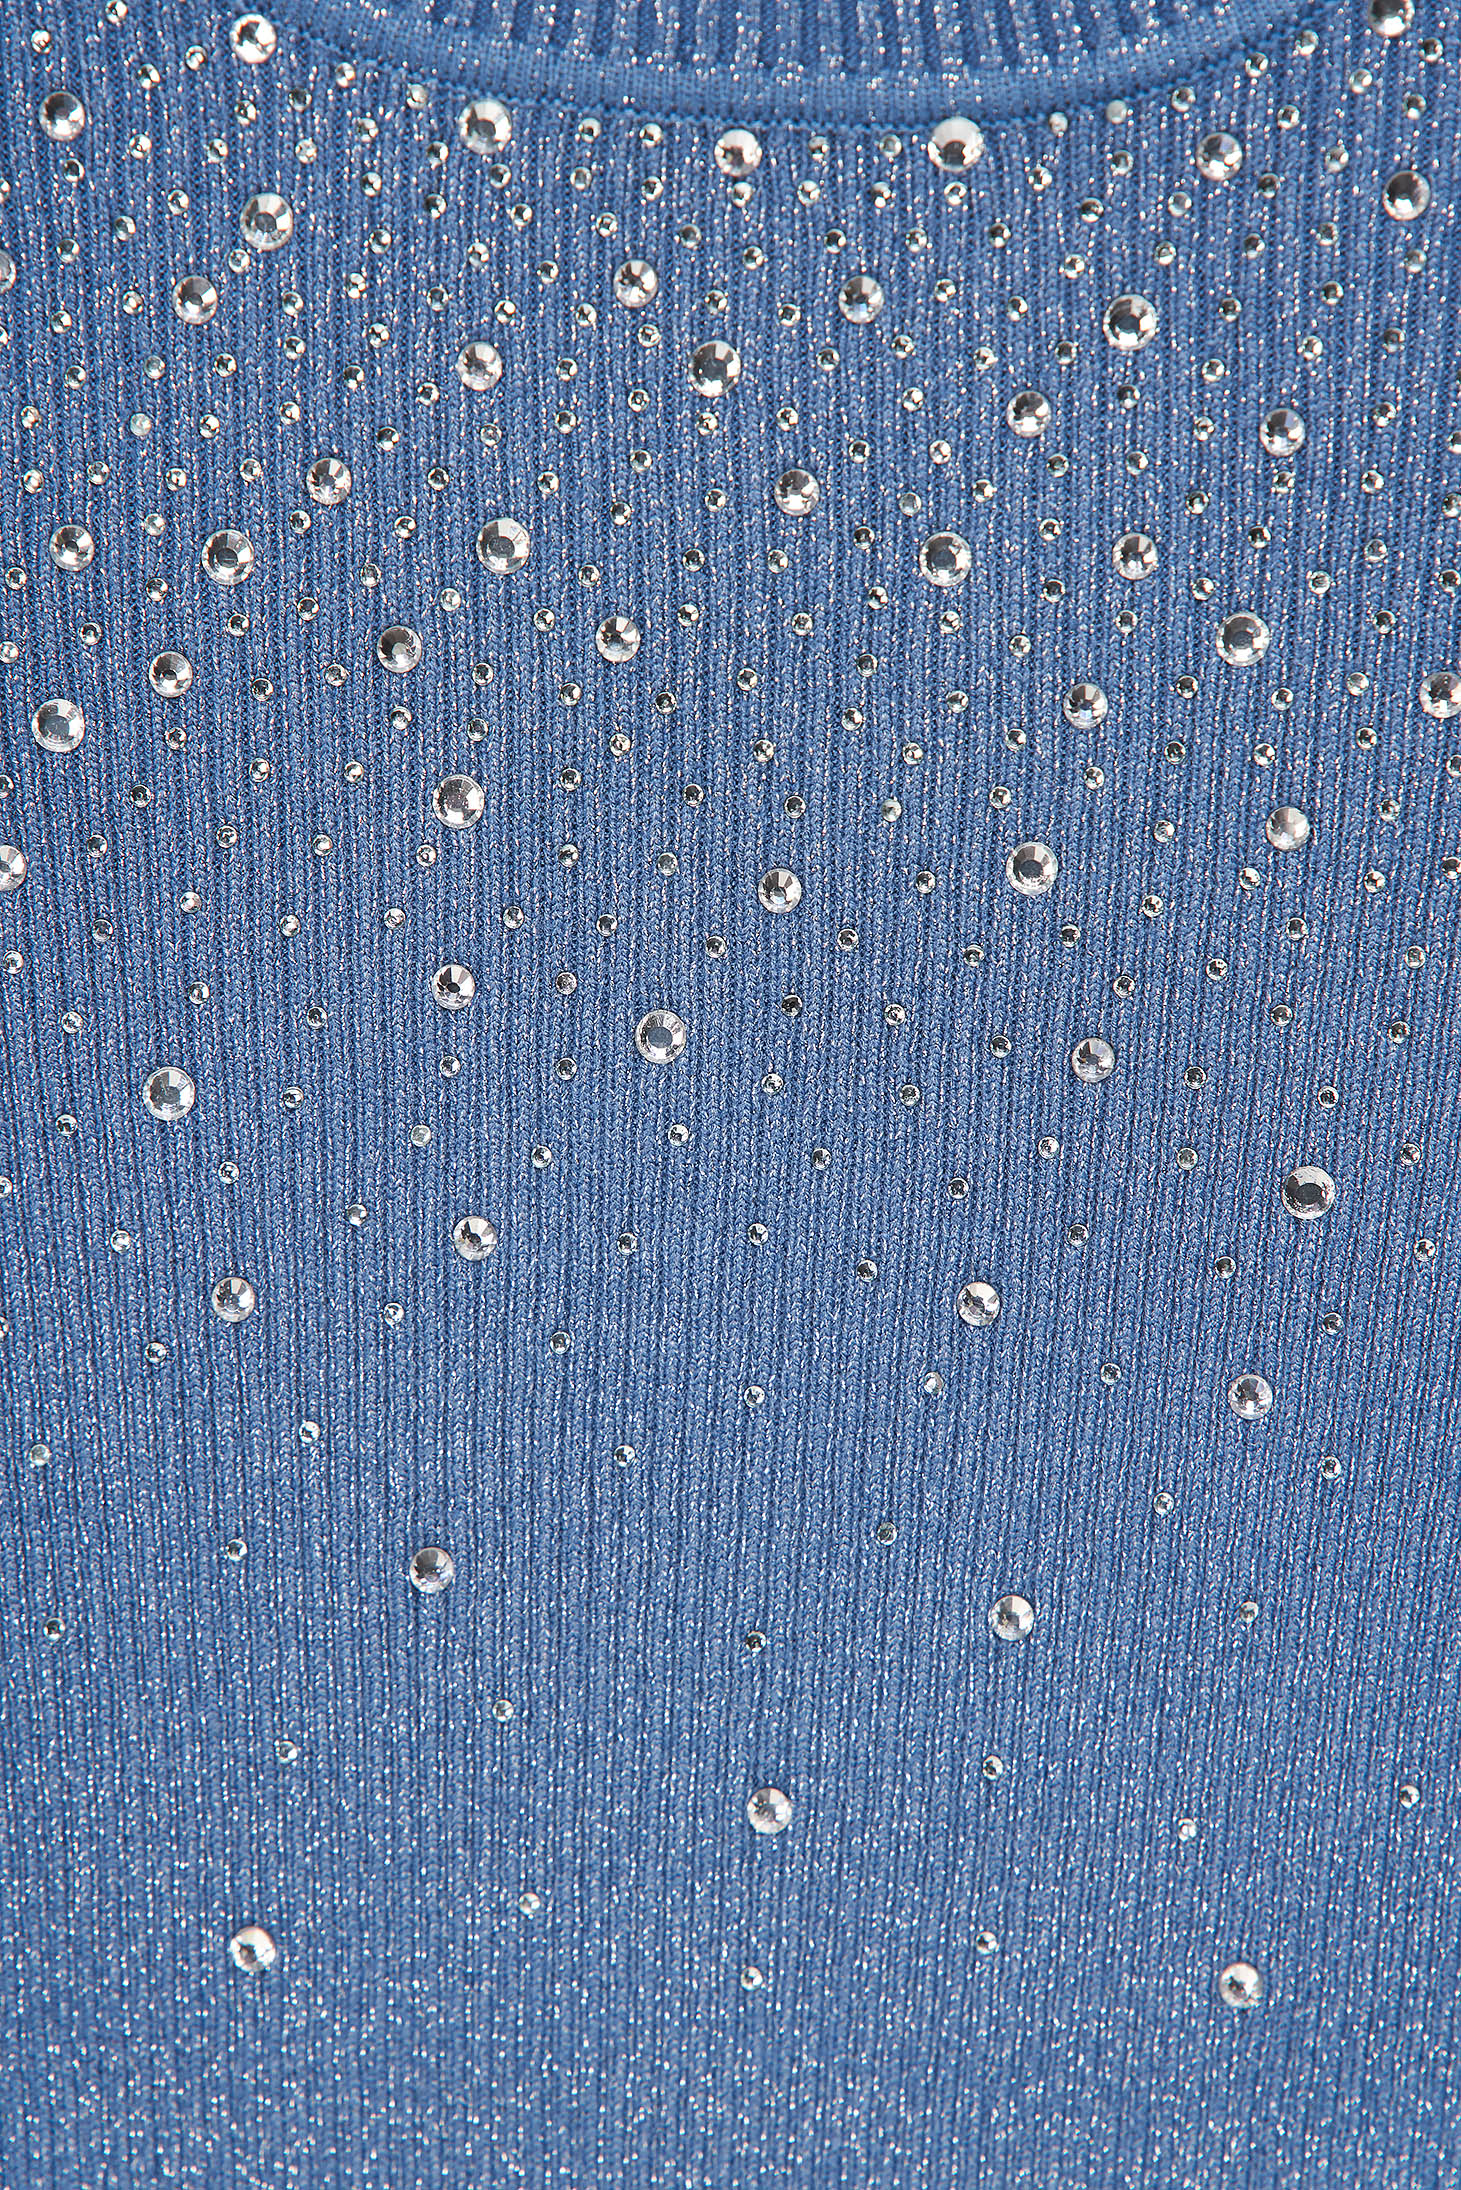 Bluza dama SunShine albastra tricotata mulata cu pietre strass cu fir stralucitor 5 - StarShinerS.ro